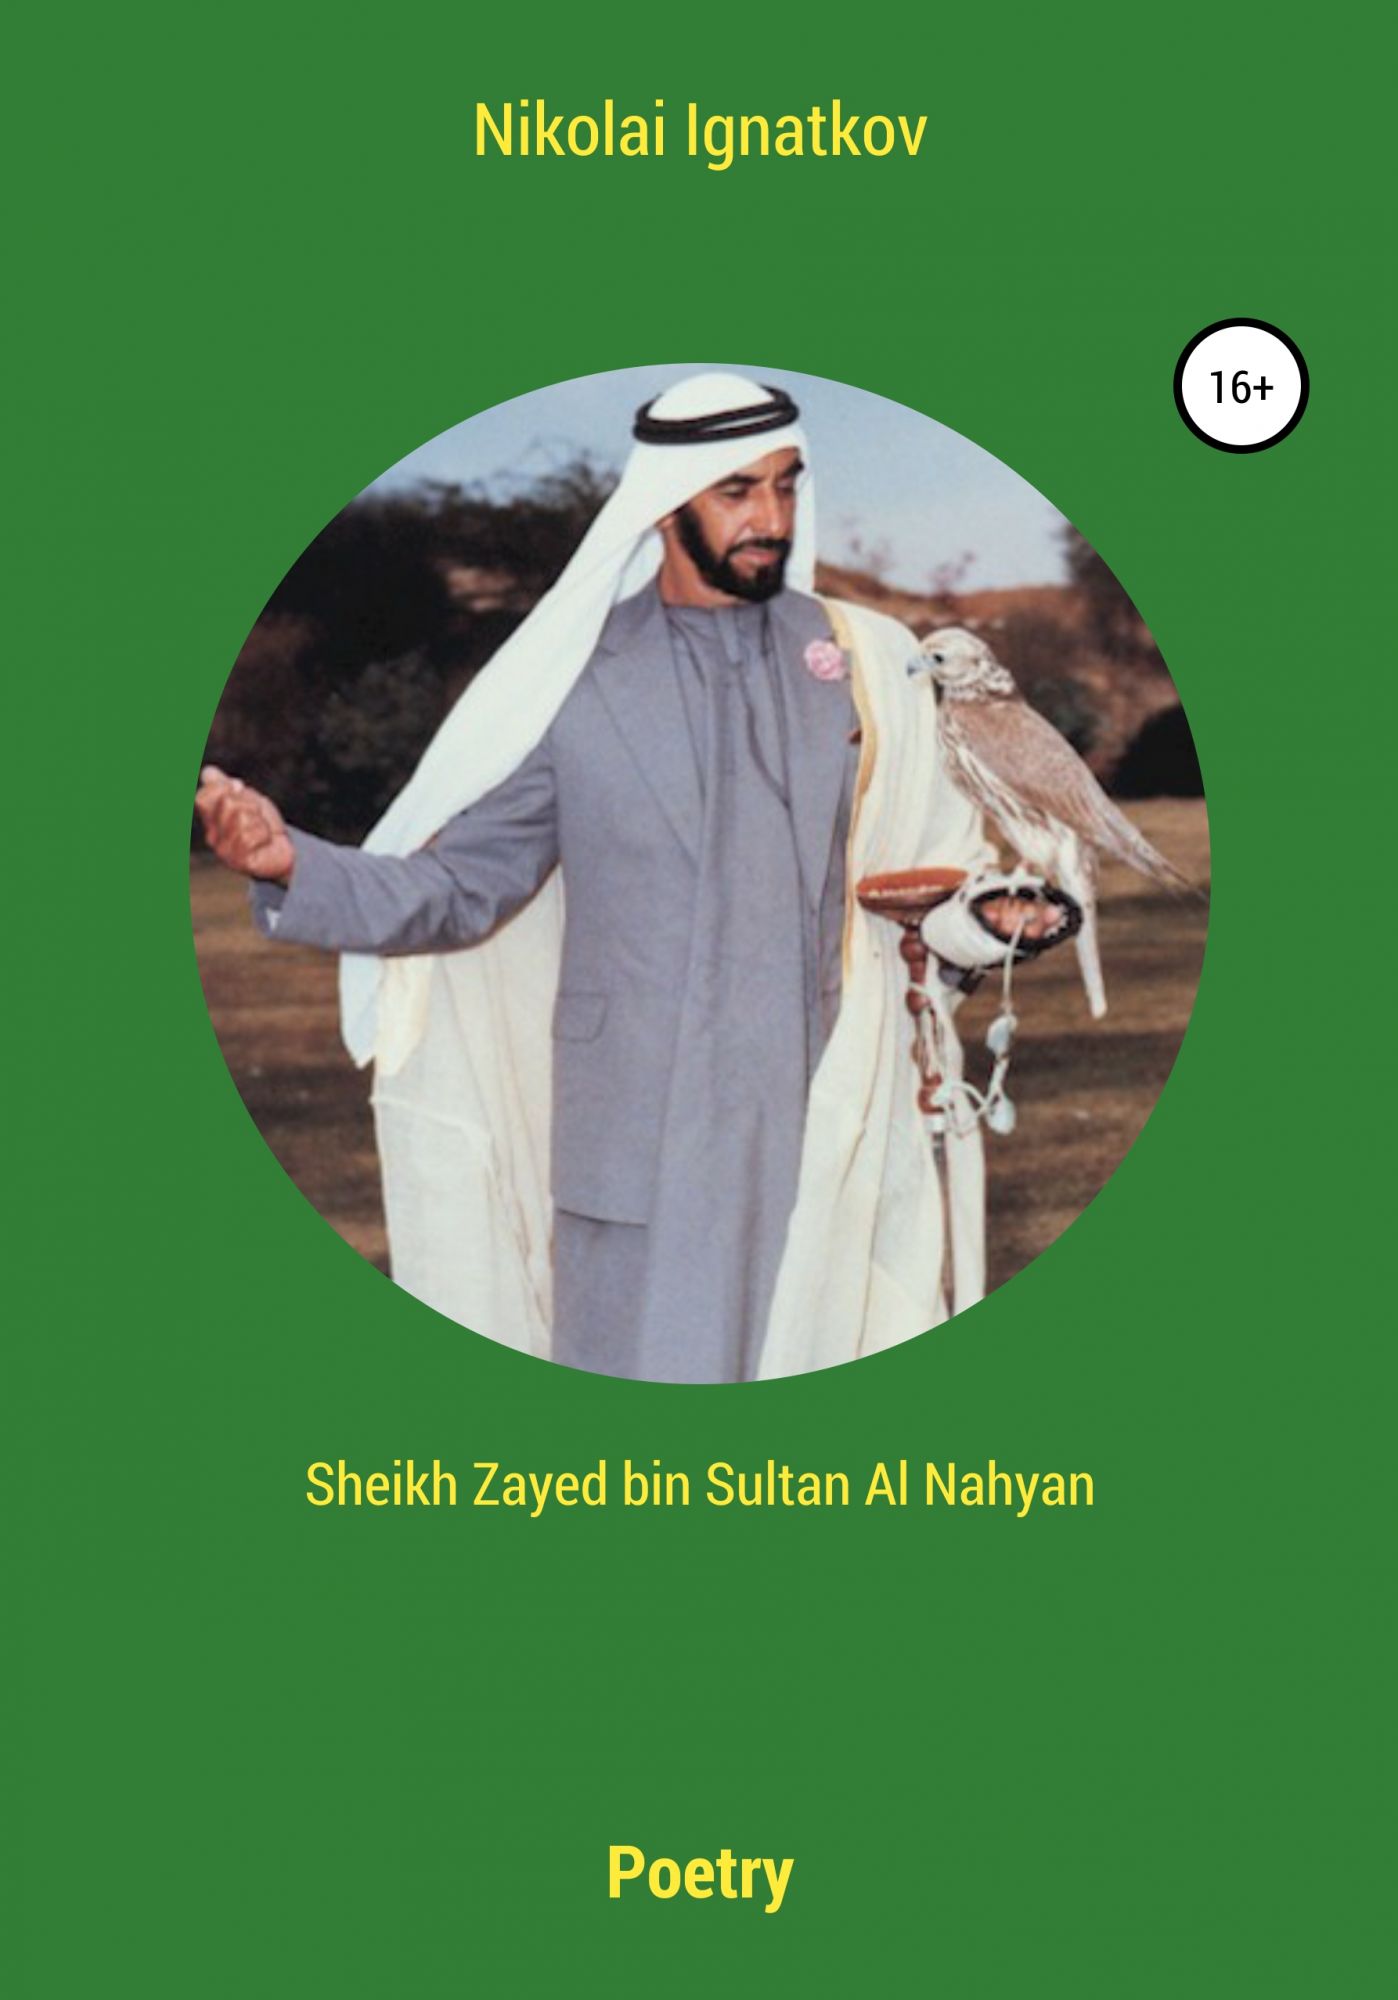 Четвертый подарок шейха читать. Sultan bin Zayed bin Sultan al Nahyan. Zayed bin Sultan al Nahyan портреты на холсте. Книги про шейхов. Книга о Шейхе Заиде.